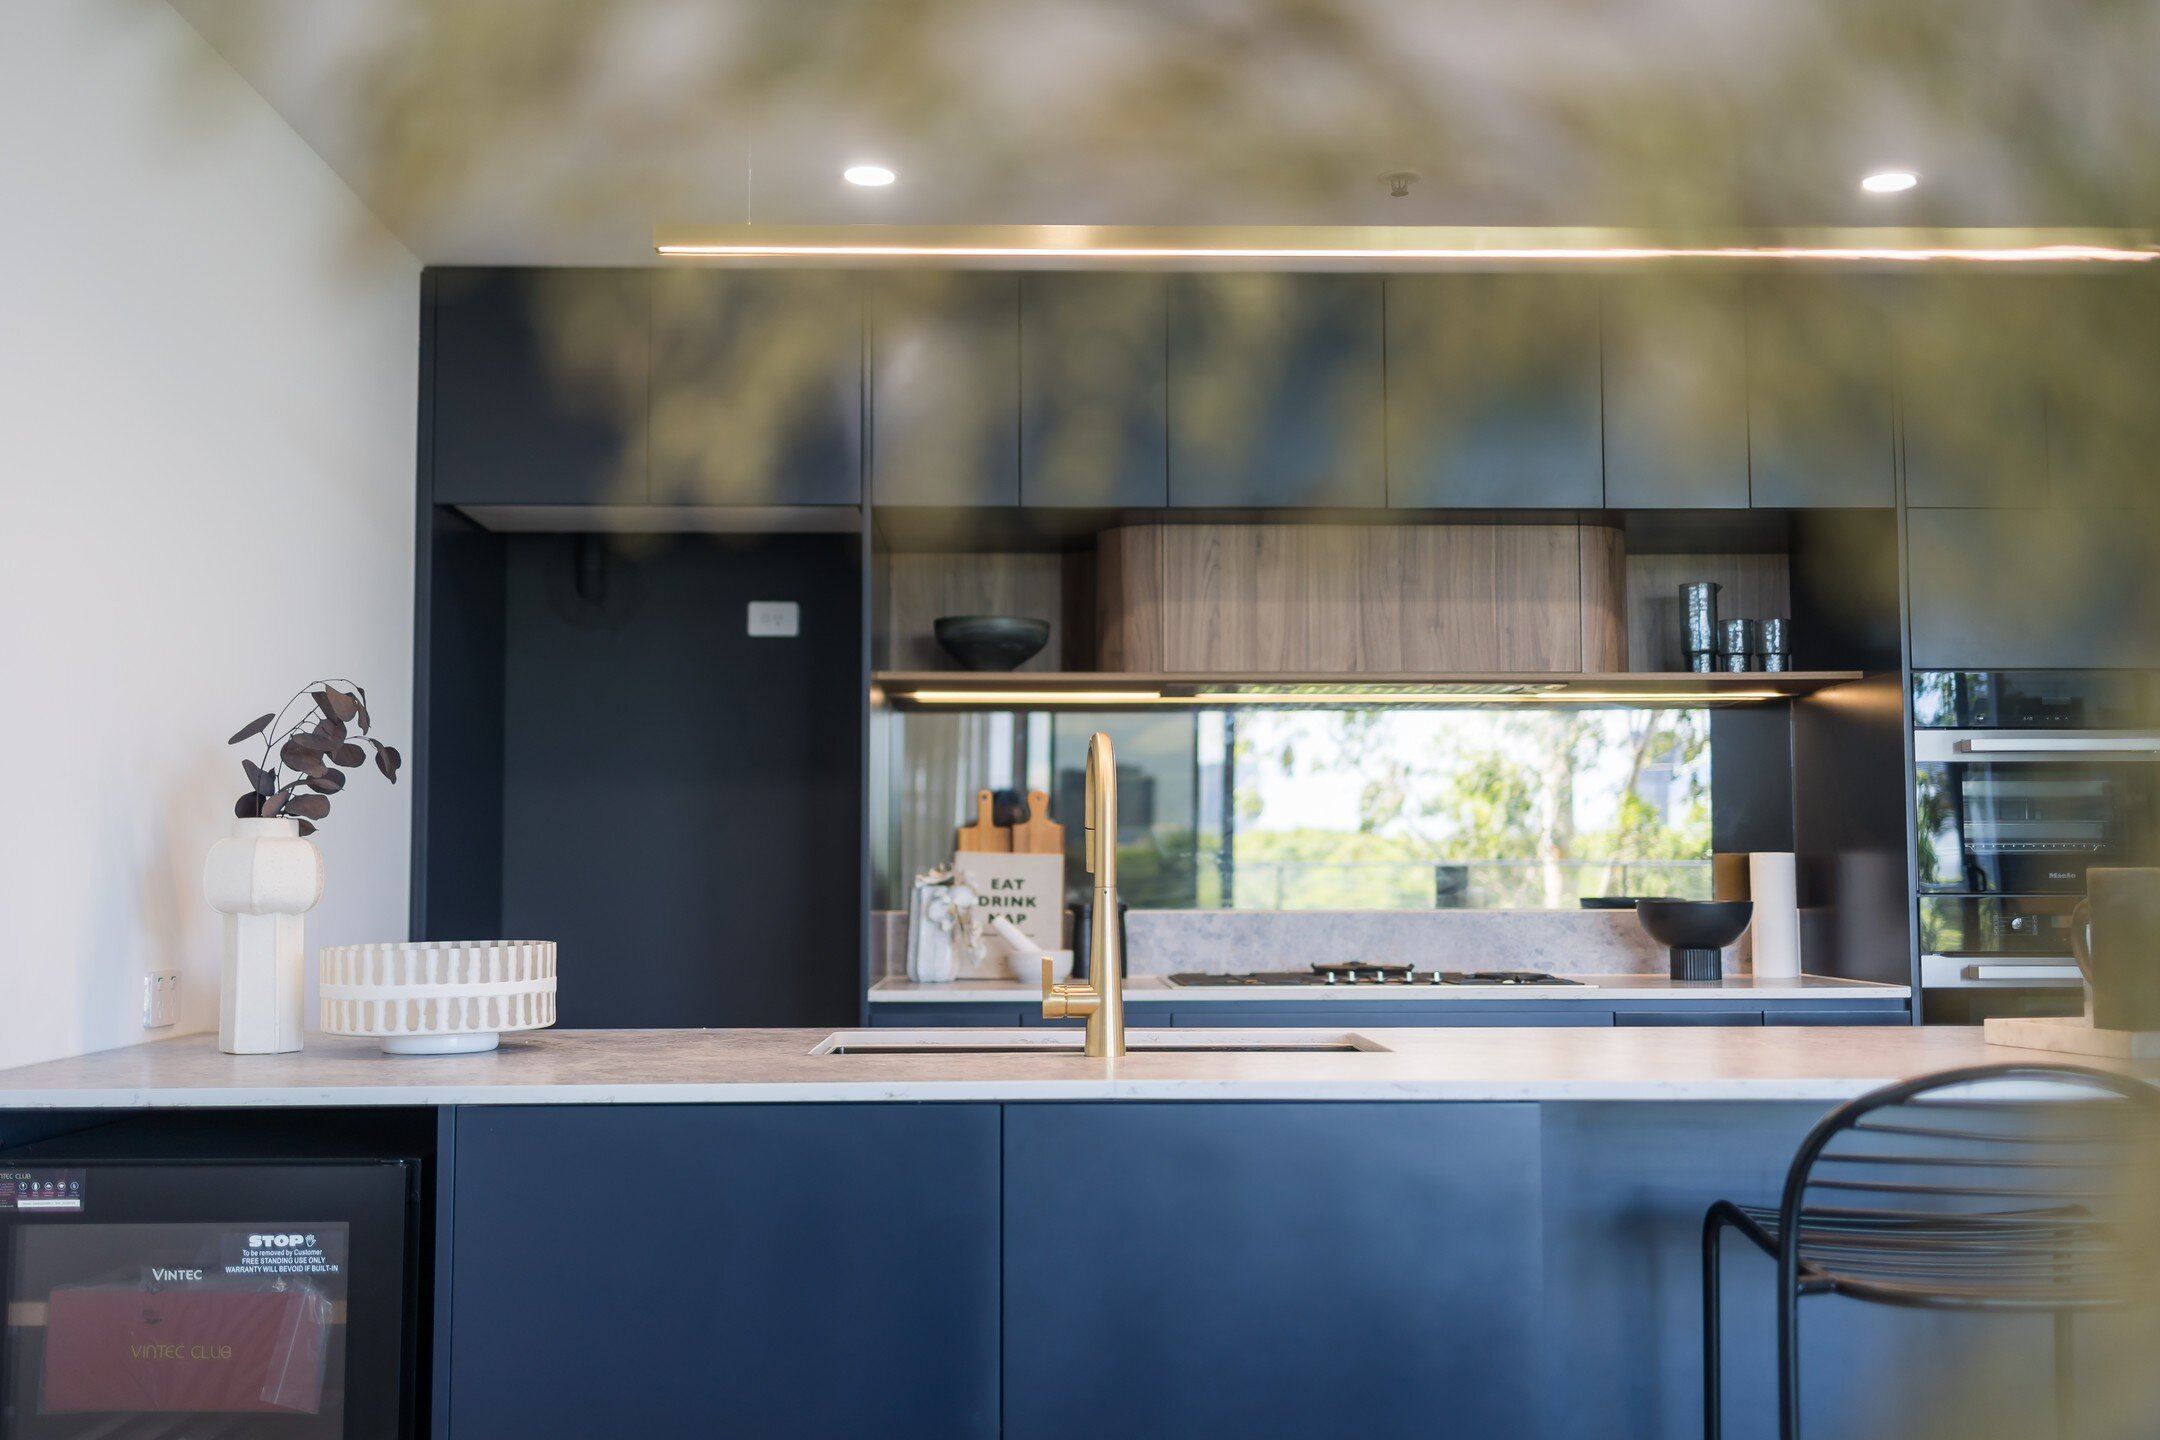 Kitchen+Living area
Renovation works @Rhodes, NSW
Completion 2023

#highendapartment #luxurylifestyle #renovation #architect #interiordesign